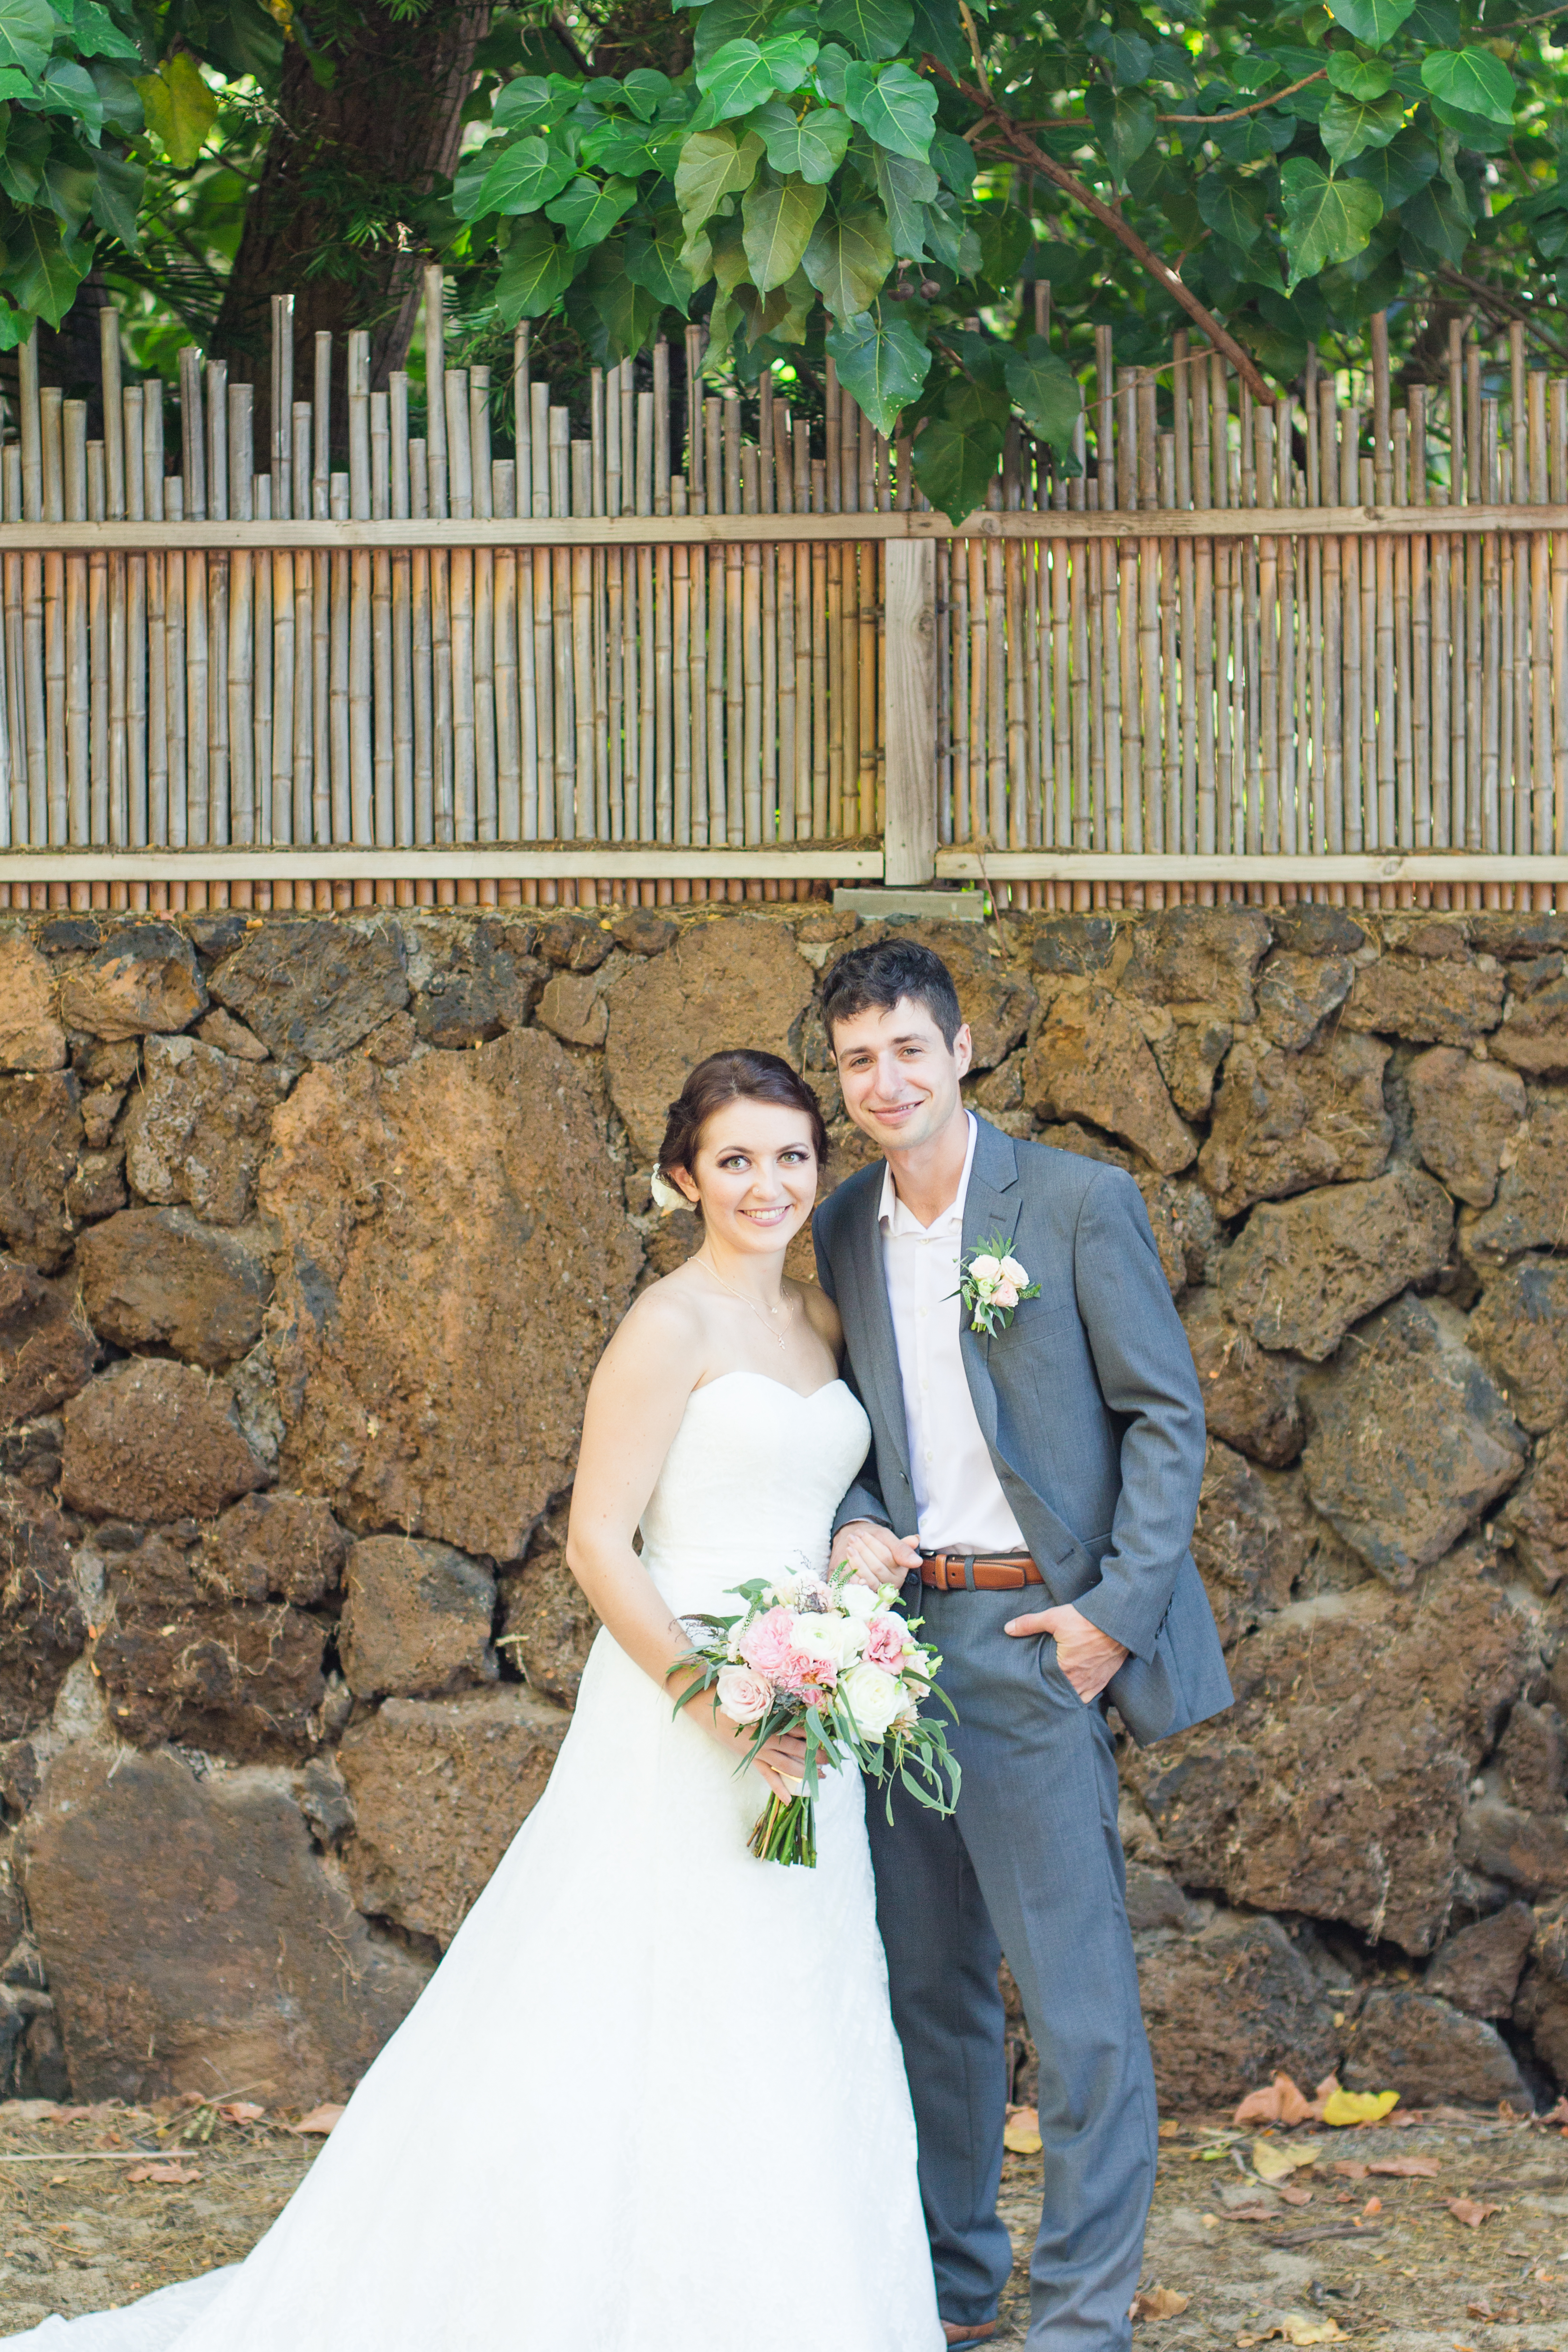 Hawaii Destination Wedding - Karen Elise Photography